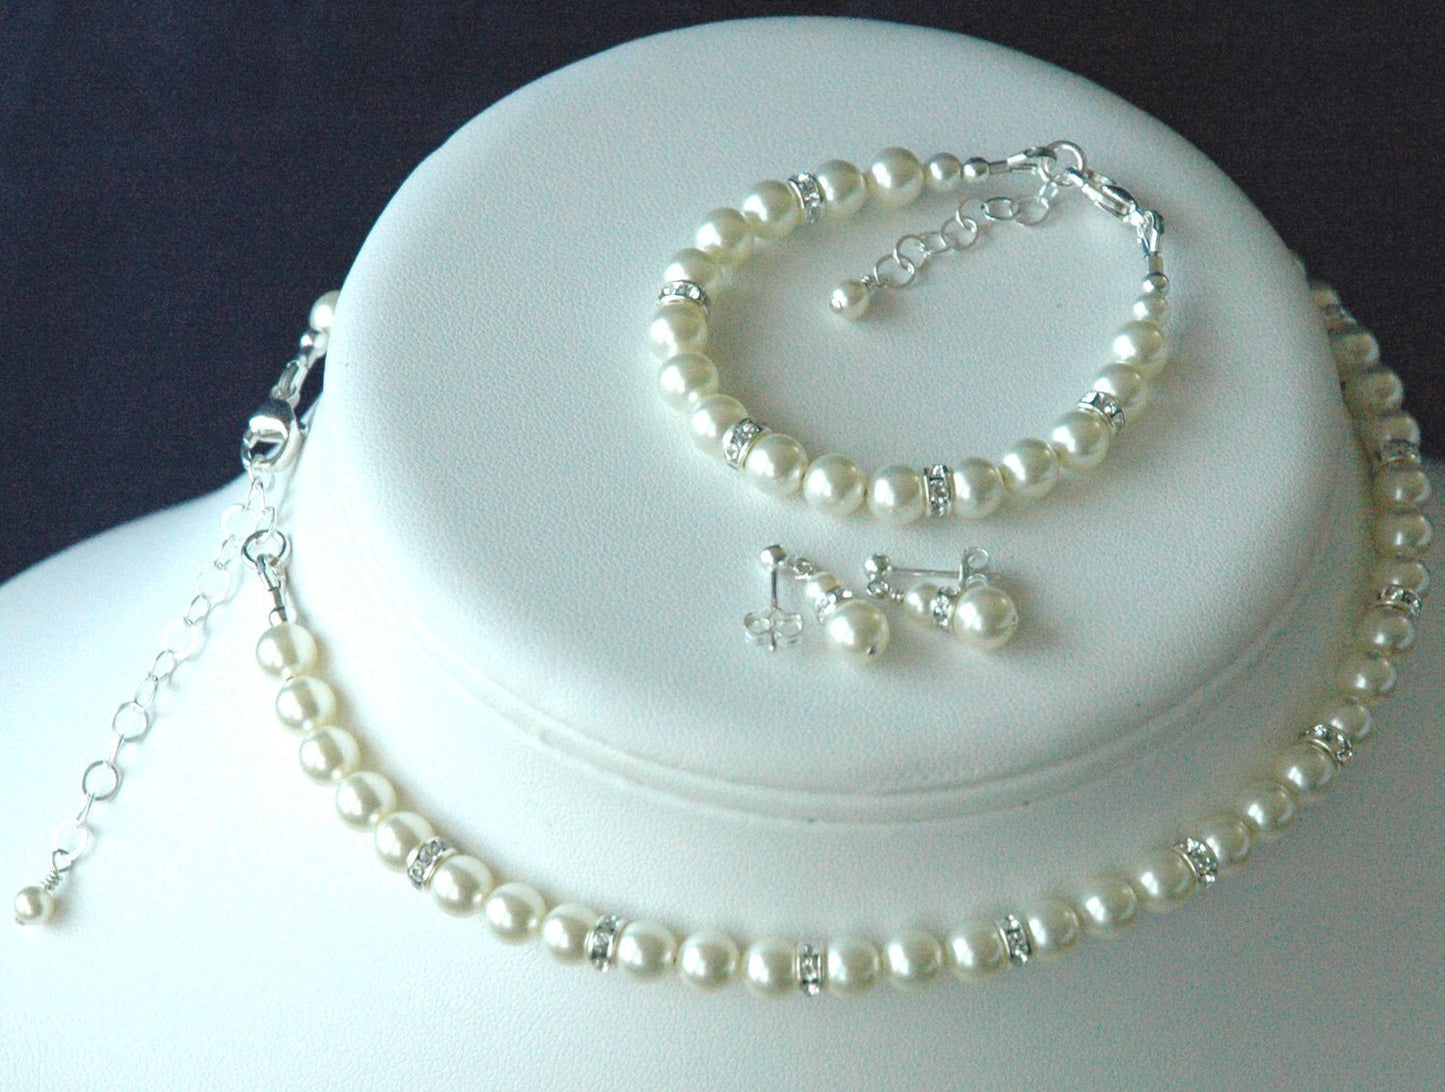 Pearl Cross Necklace Bracelet Earrings SET, First Communion Pearl Jewelry Set,Confirmation Jewelry Set,Baptism Pearl Jewelry Set,Pearl Set